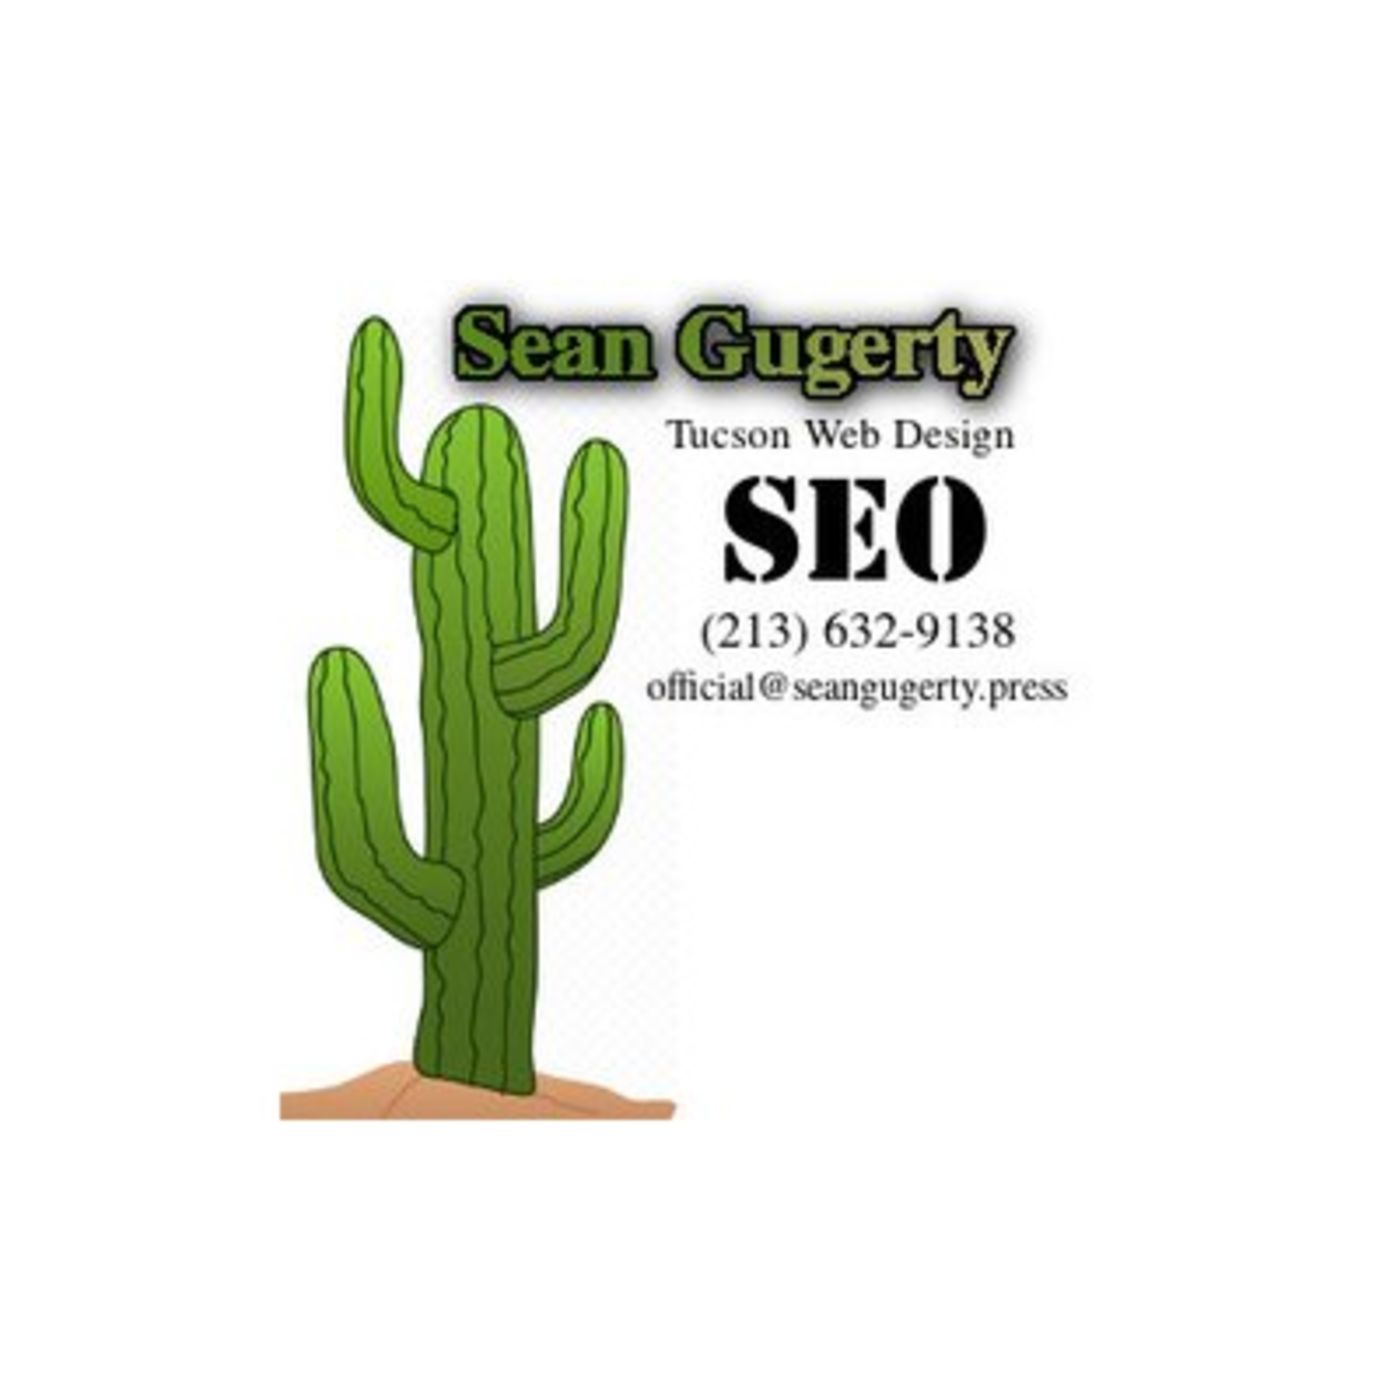 Sean Gugerty Tucson Web Design